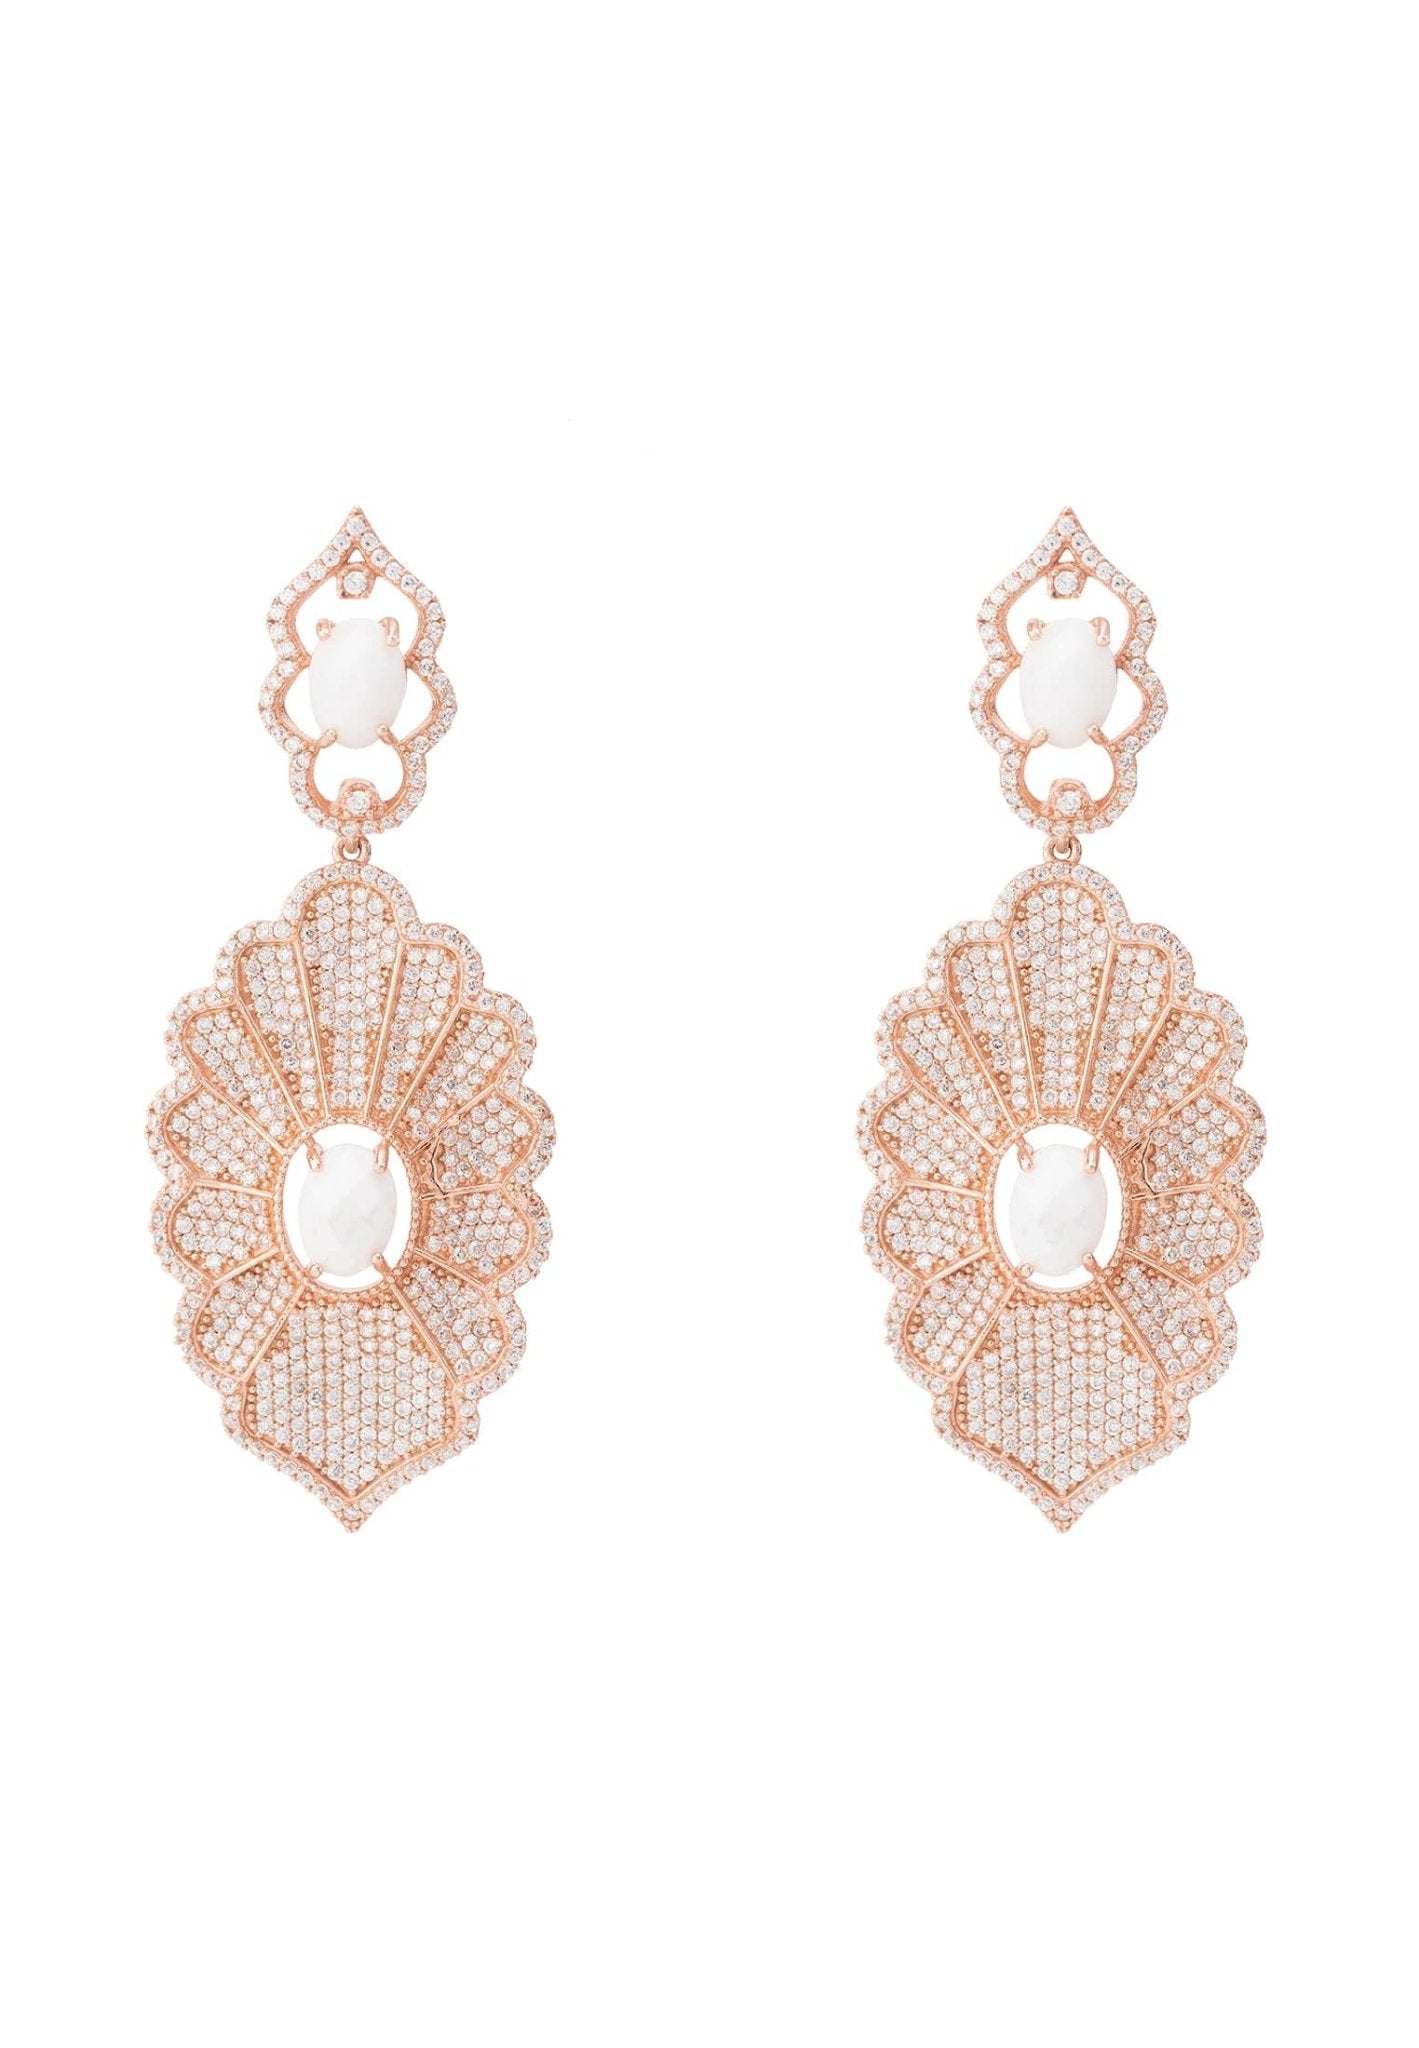 Danbury Earrings White Cz Rosegold - LATELITA Earrings